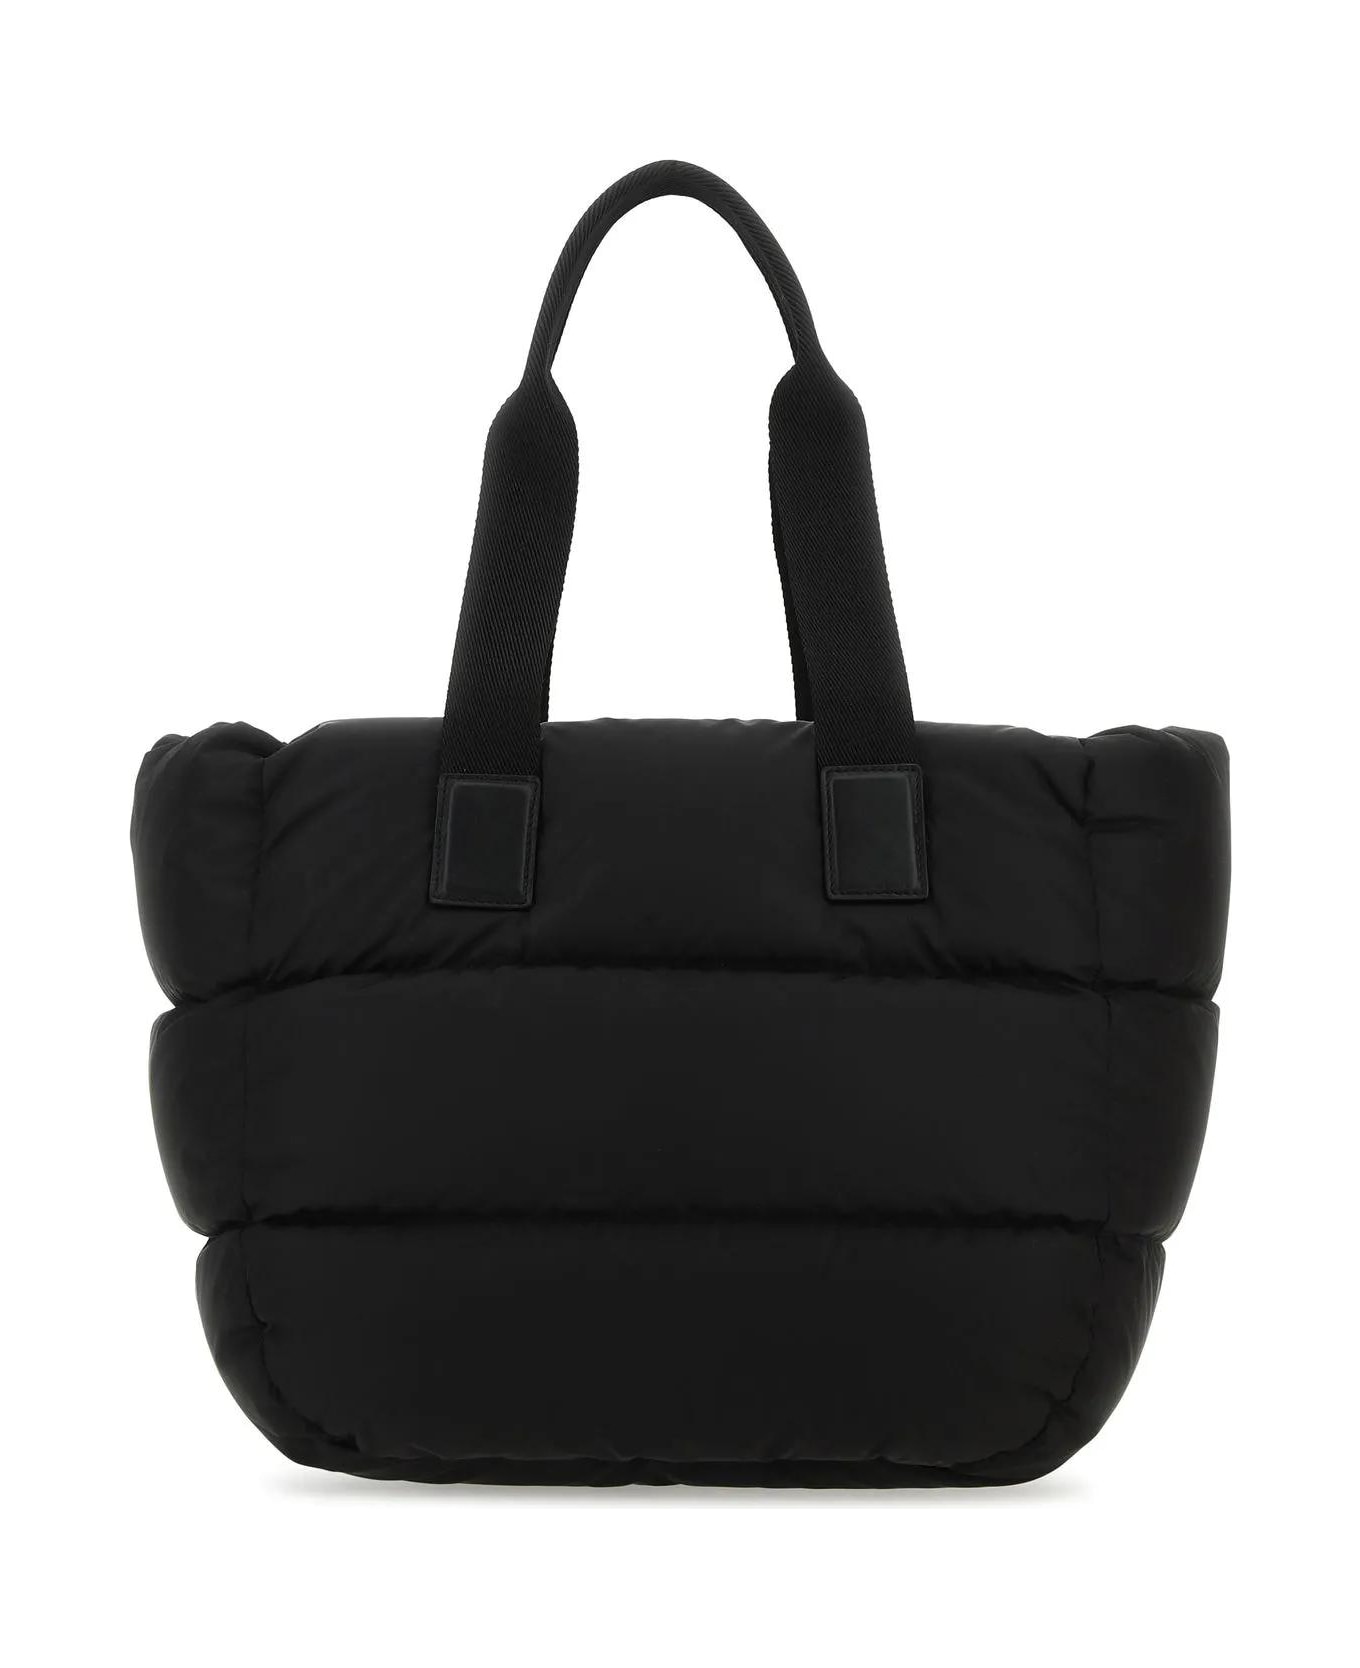 Moncler Black Nylon Caradoc Shopping Bag - Nero